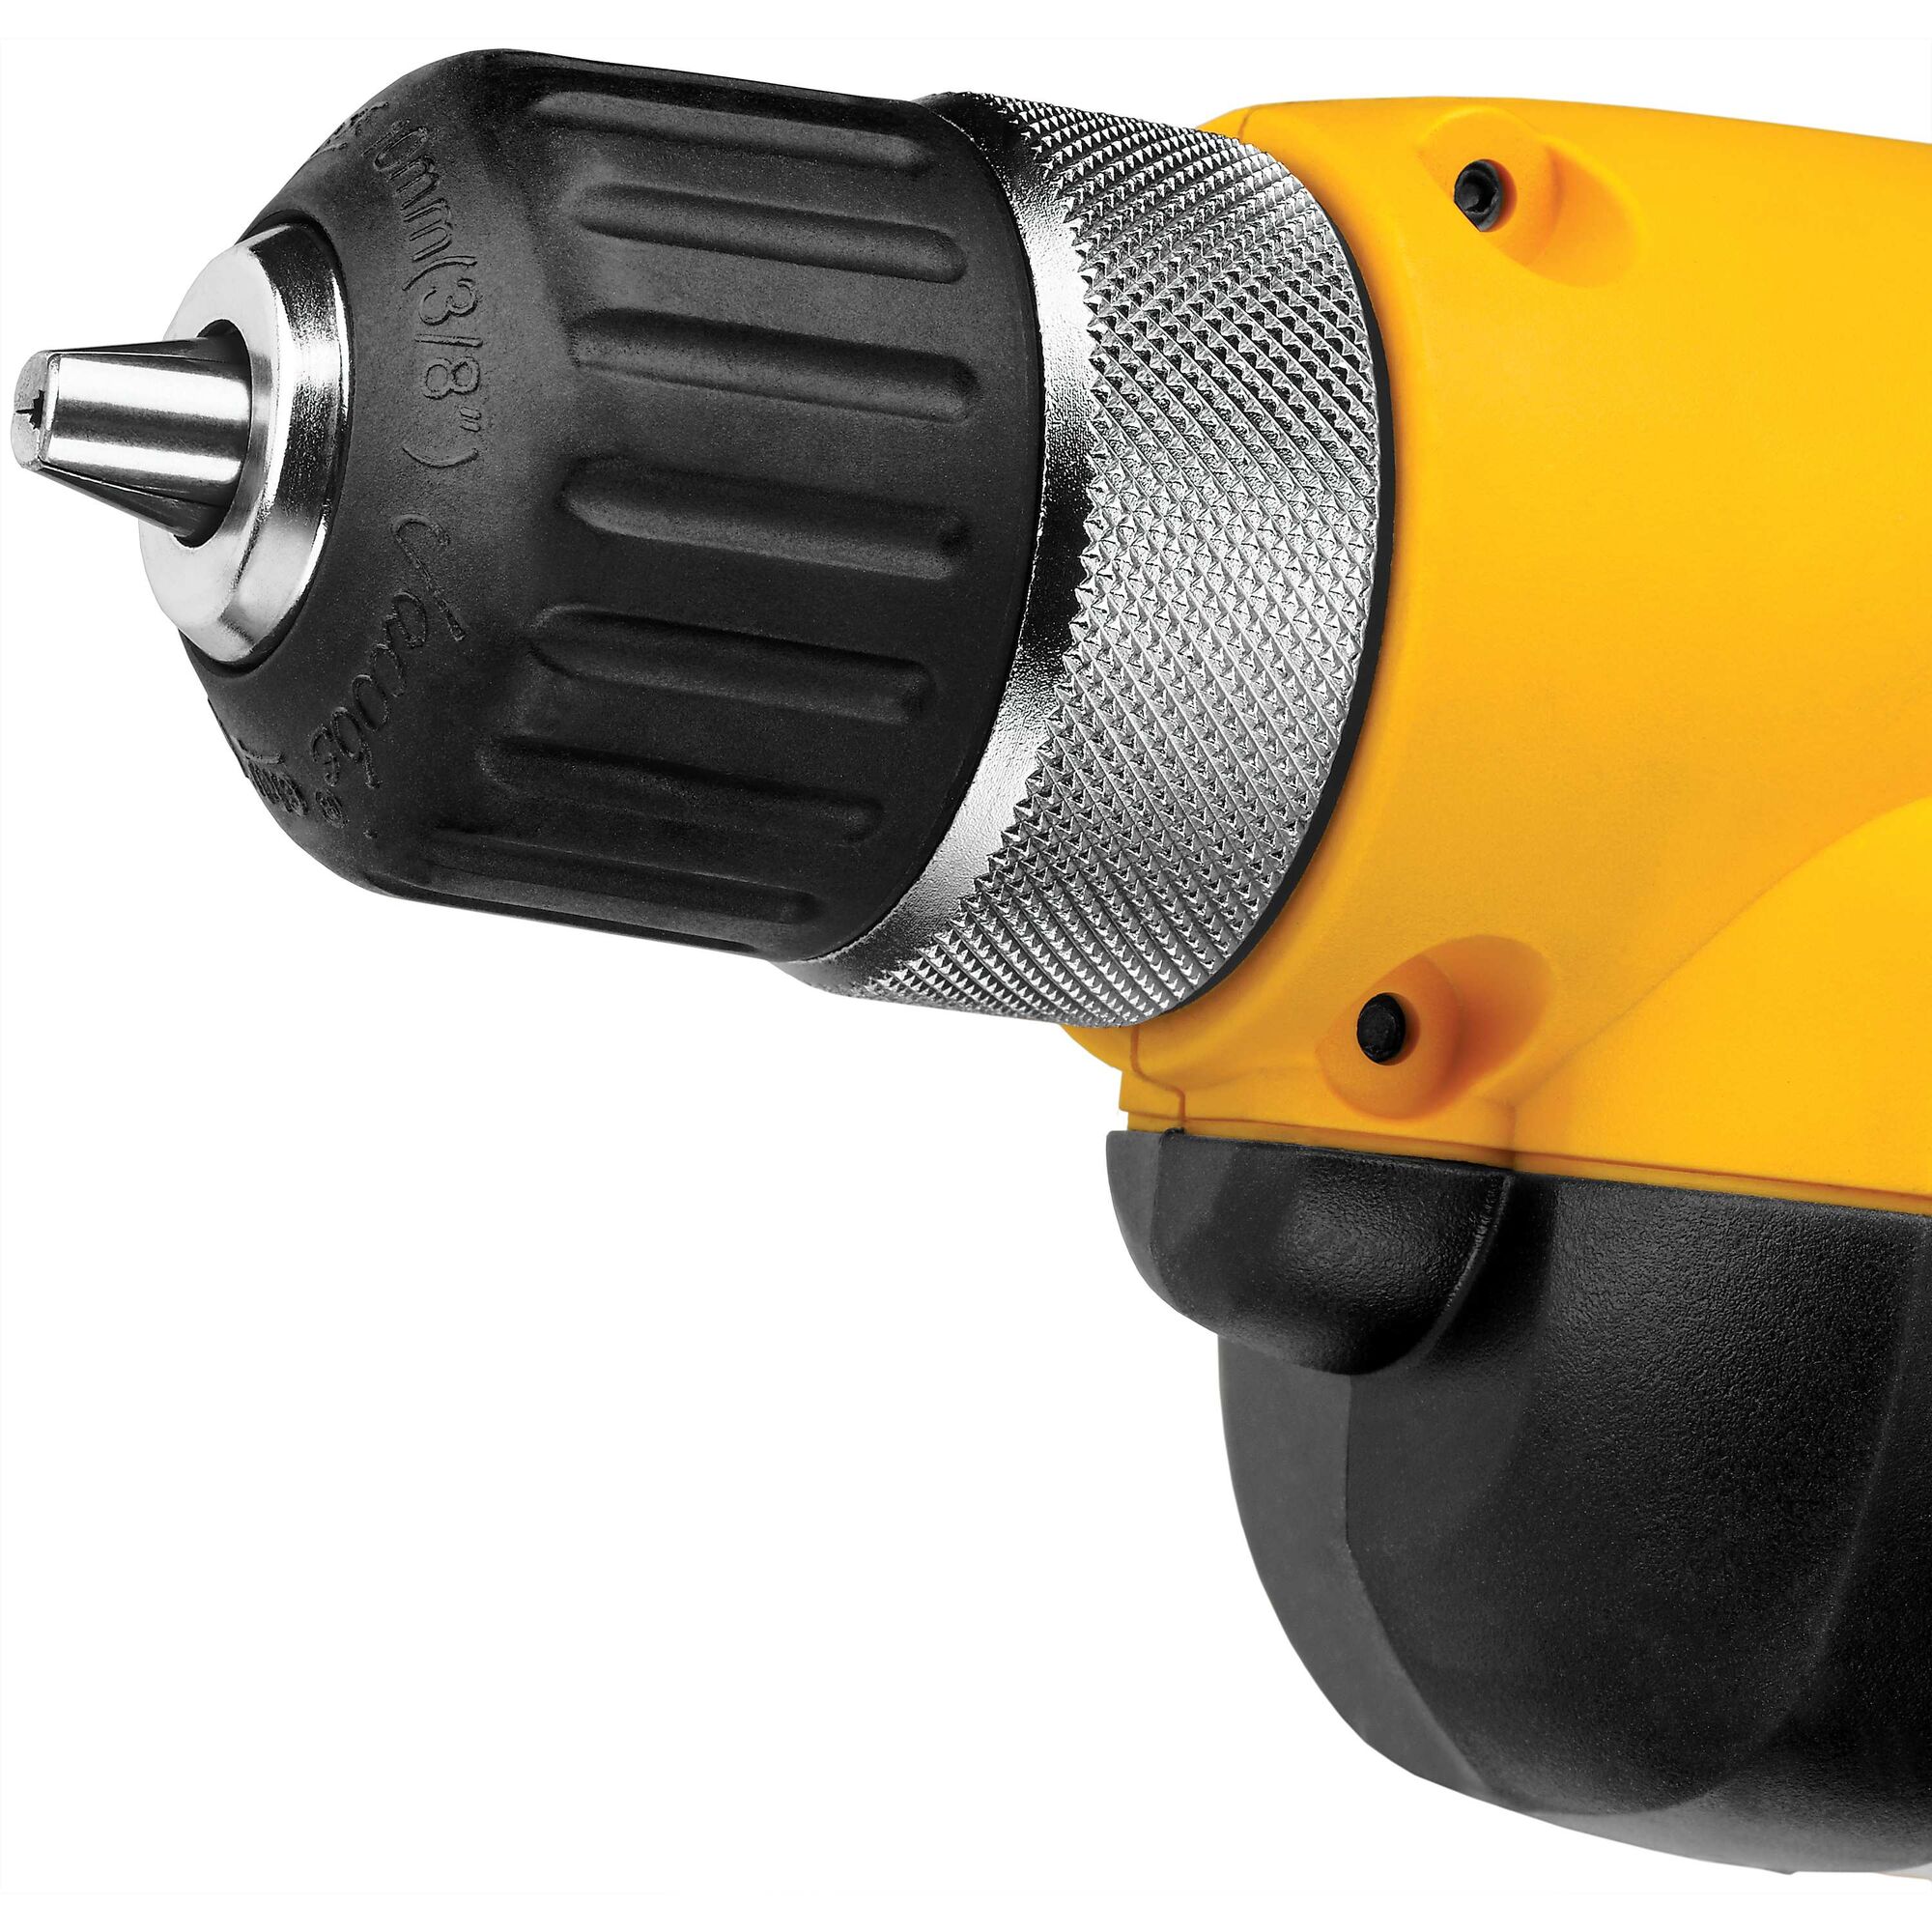 DEWALT DWD110K 3/8 inch Variable Speed Reversible Grip Drill Kit for sale online 